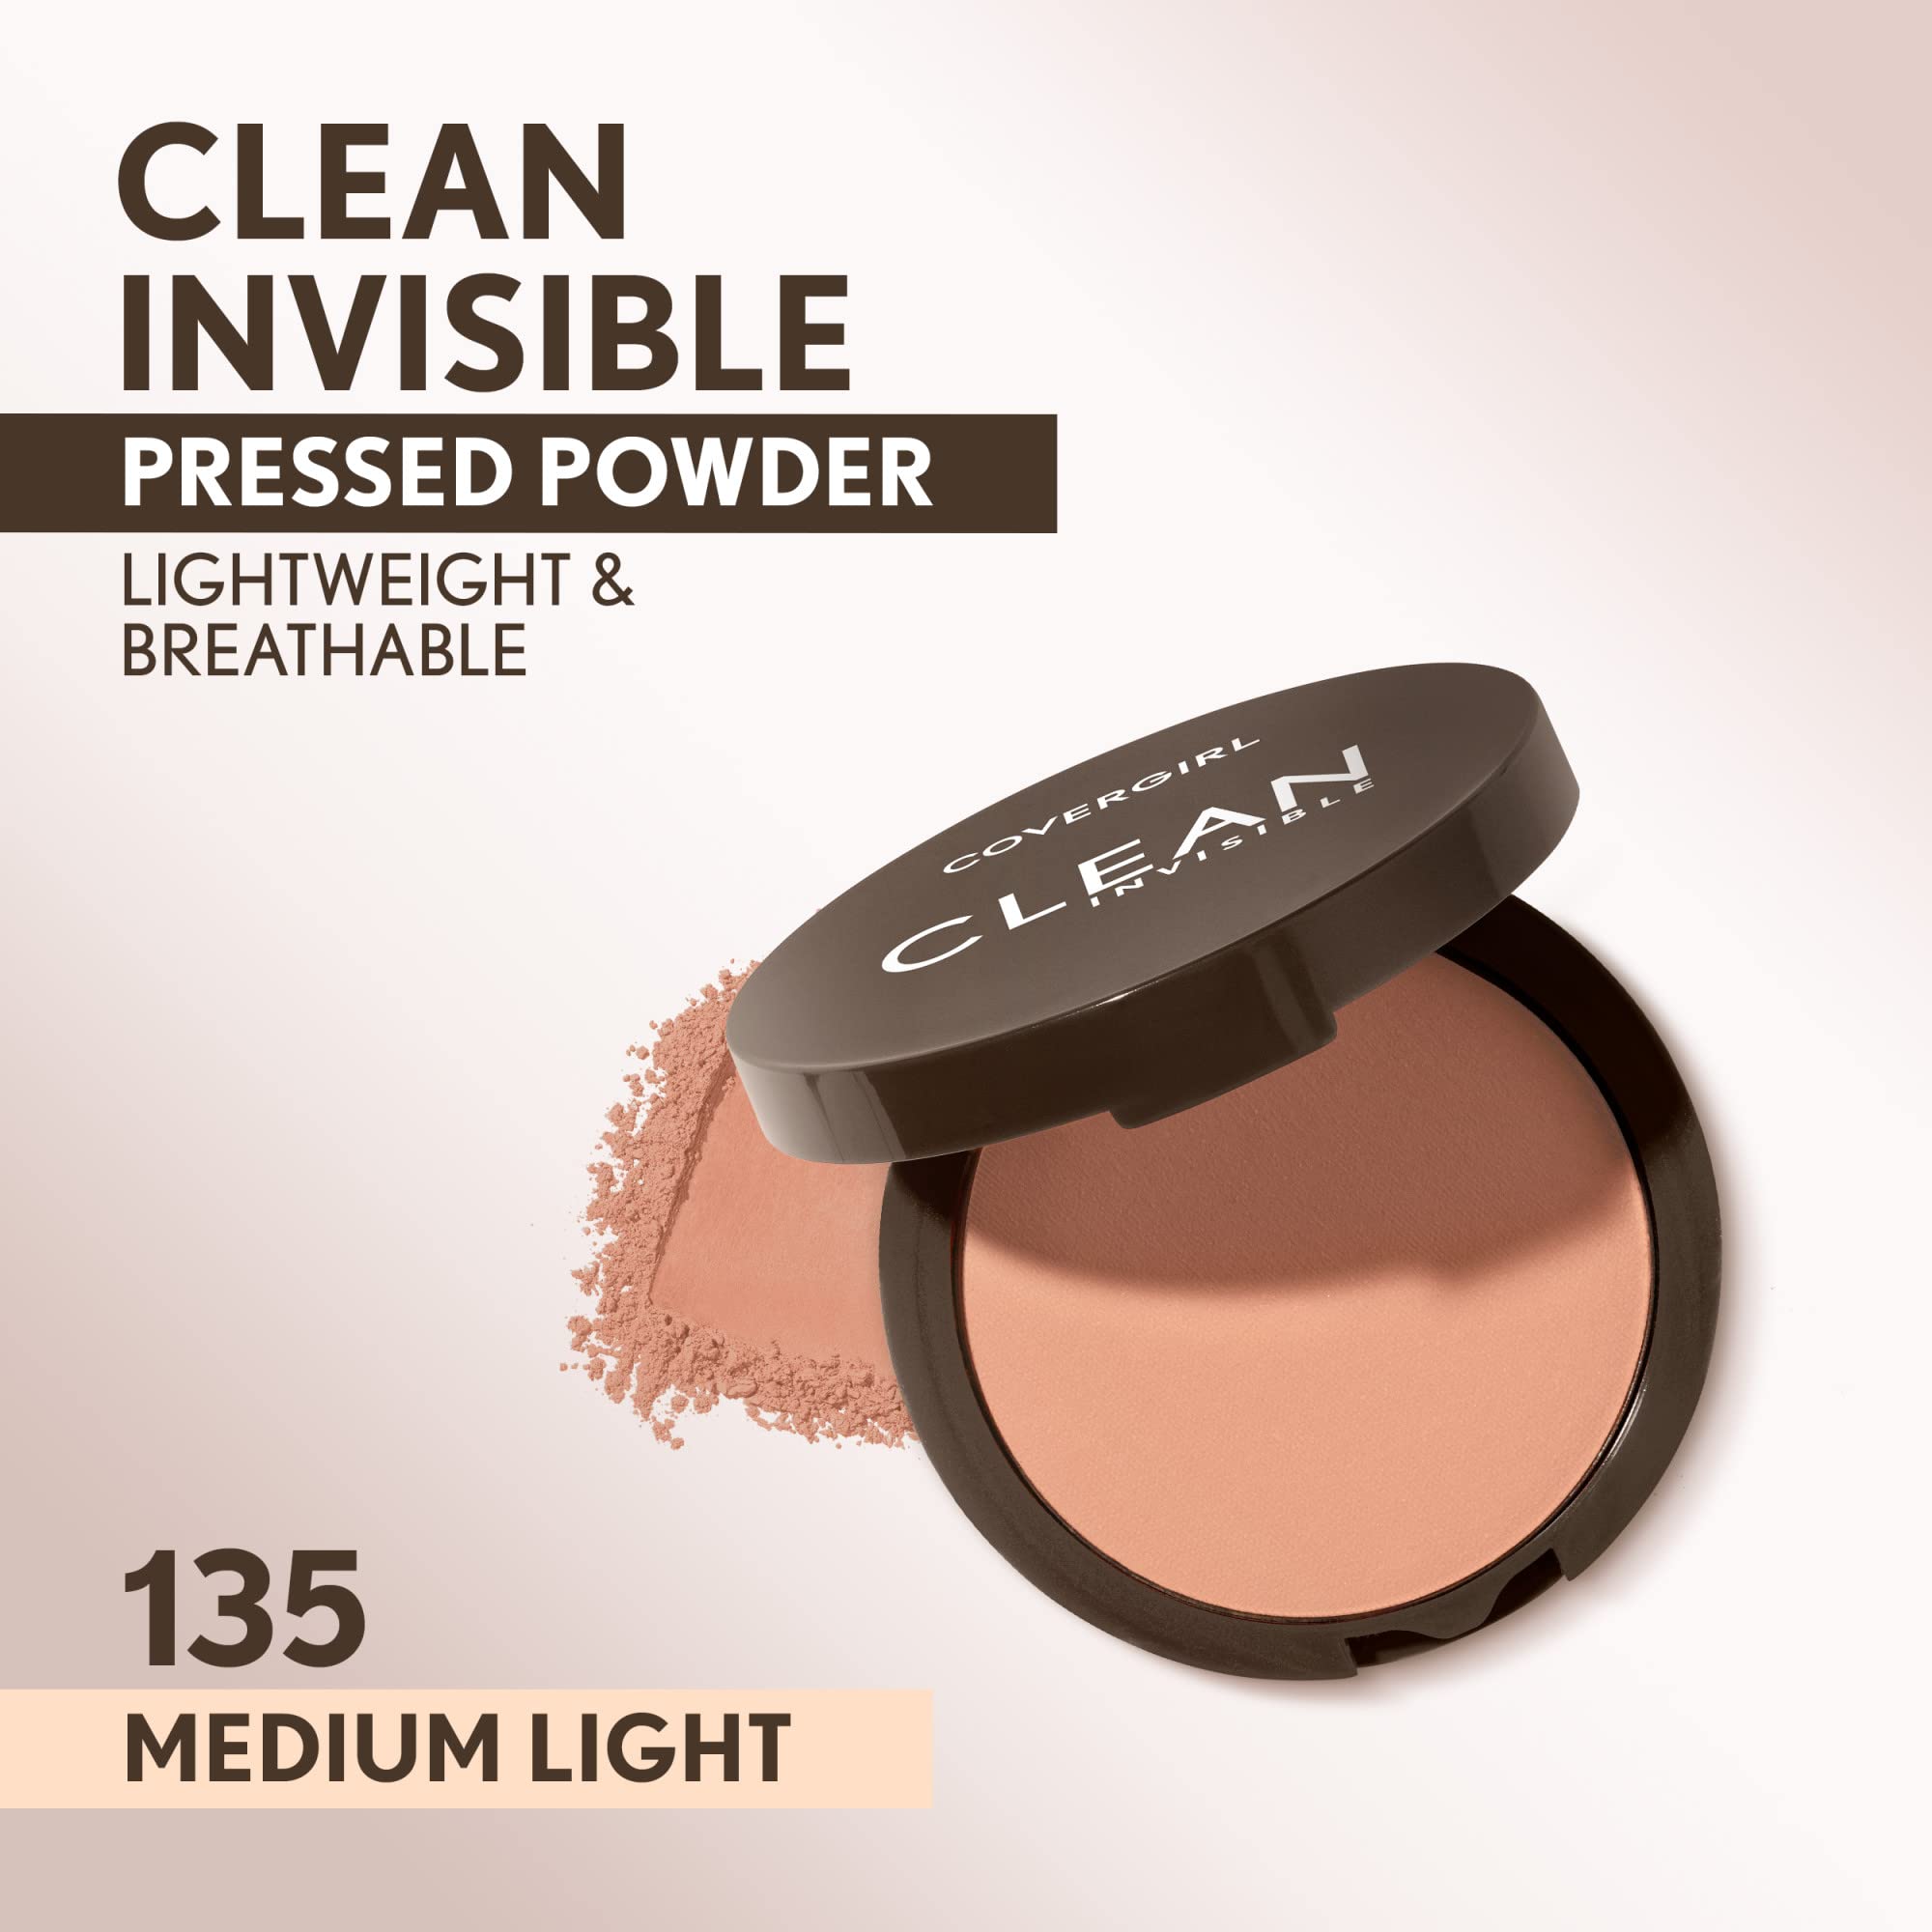 Covergirl Clean Invisible Pressed Powder, Lightweight, Breathable, Vegan Formula, Medium Light 135, 0.38oz